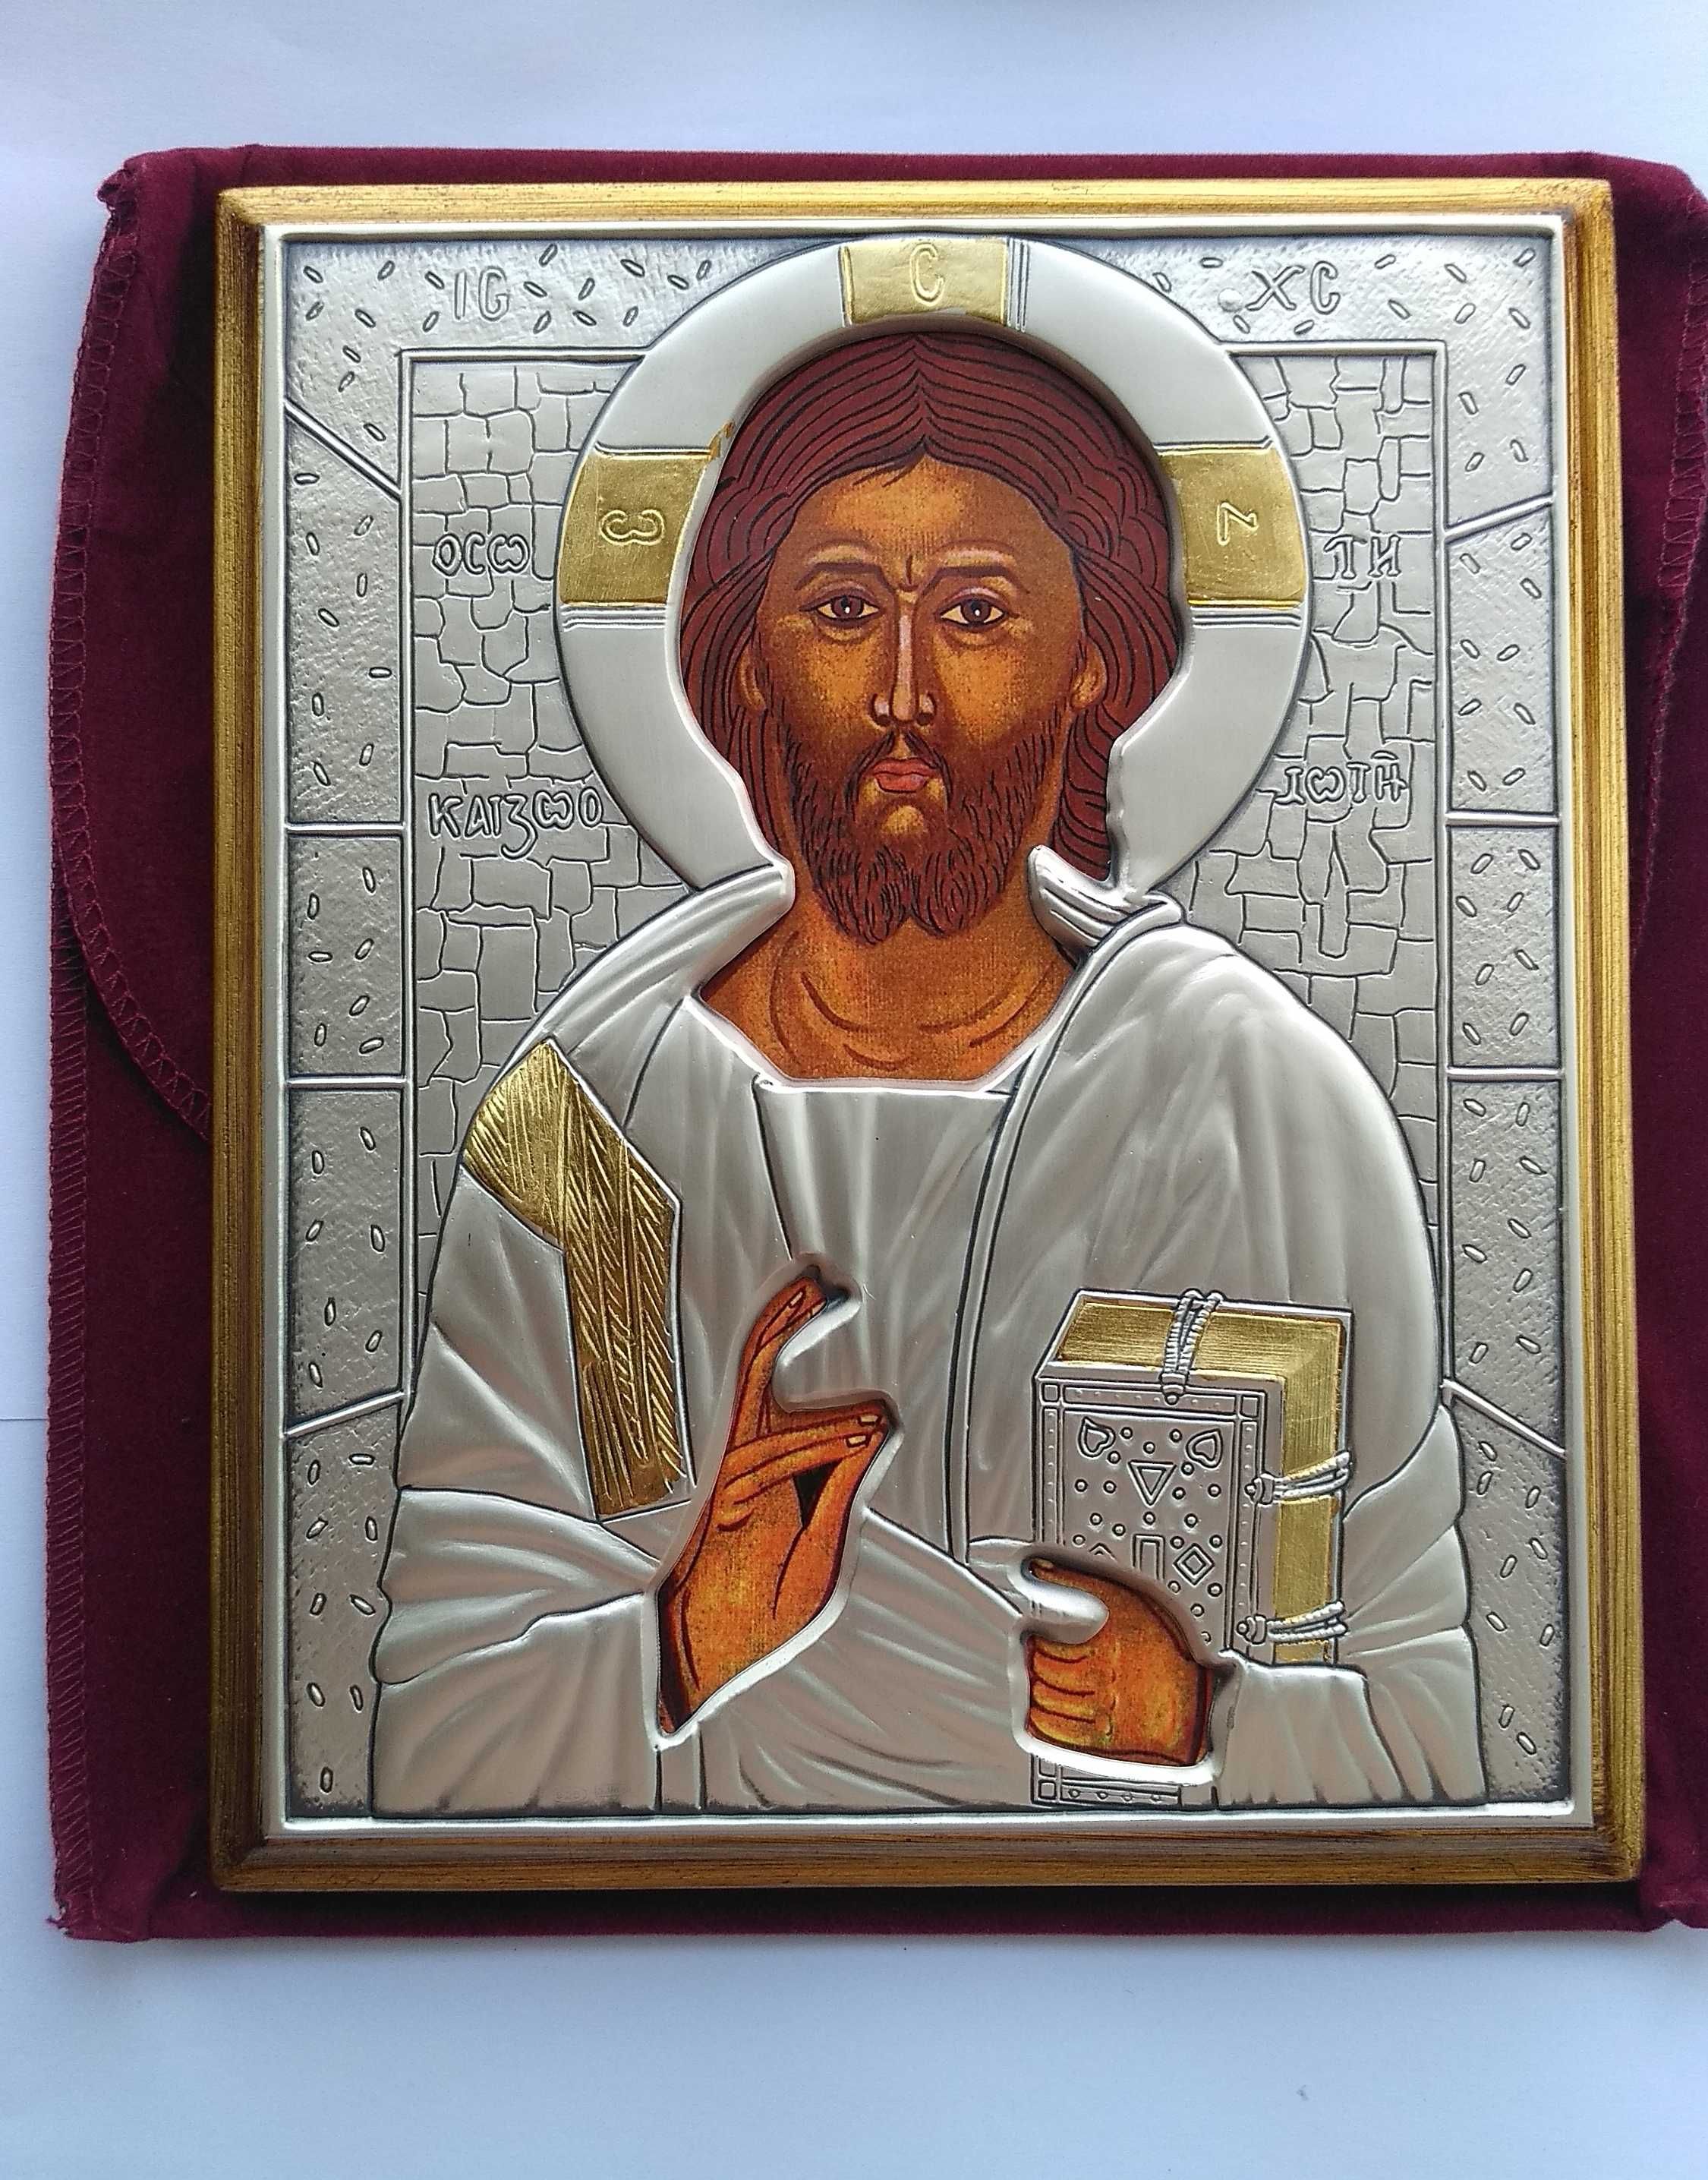 Vand Icoana deosebita cu Iisus din Argint 925 cumparata din Italia